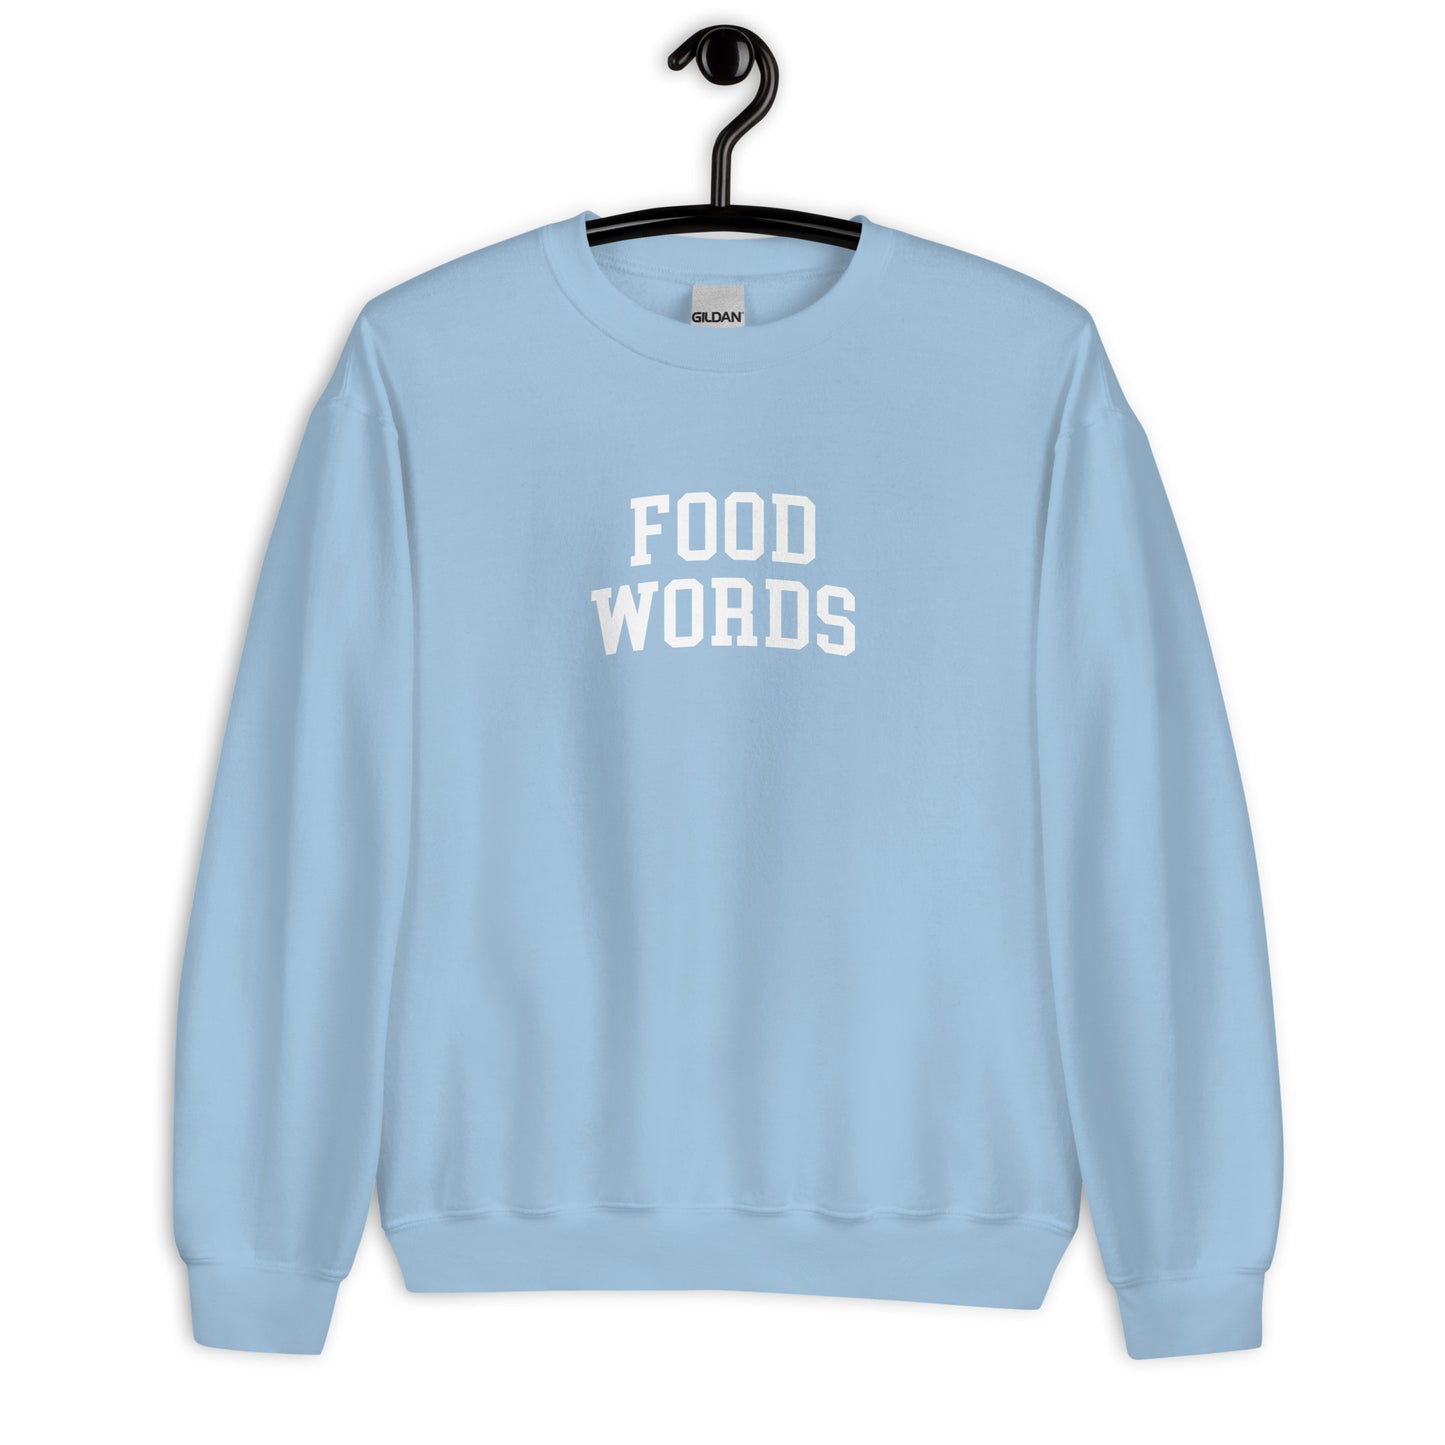 Food Words Sweatshirt - Arched Font